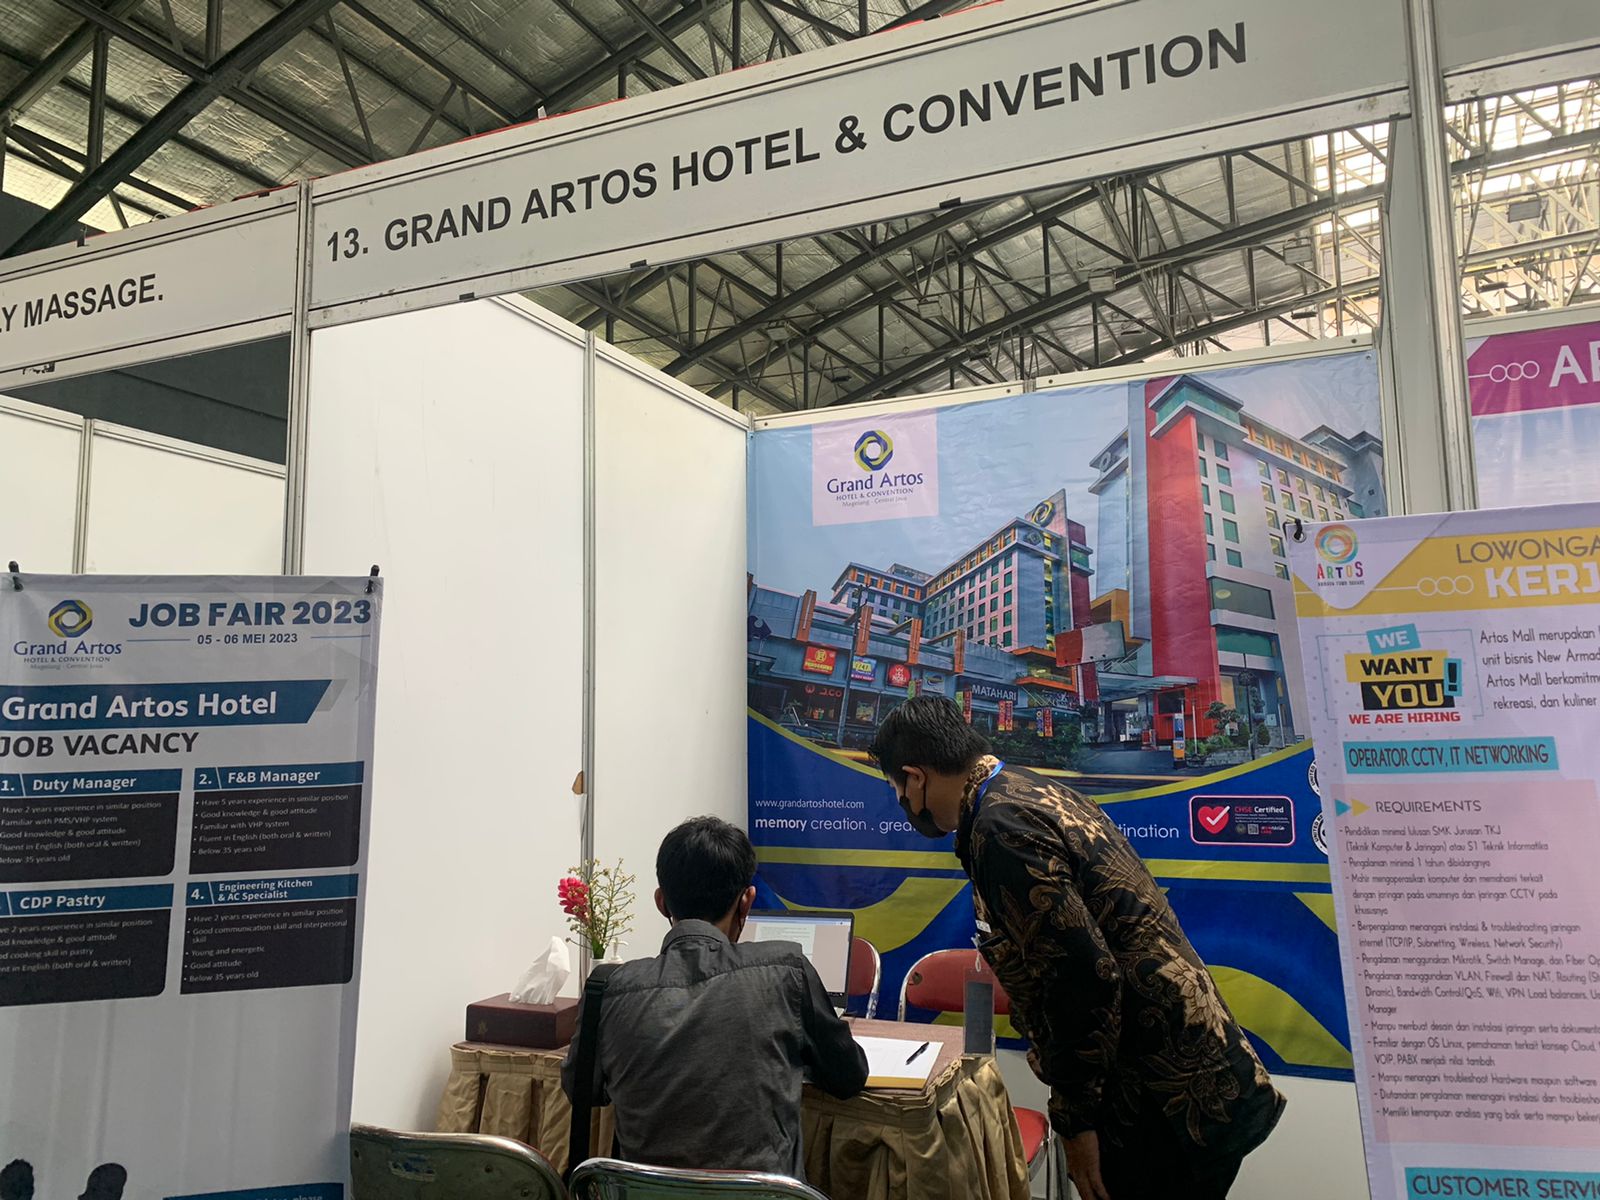 Grand Artos Hotel & Convention Buka Sejumlah Loker, Syaratnya Hanya Kirim CV!